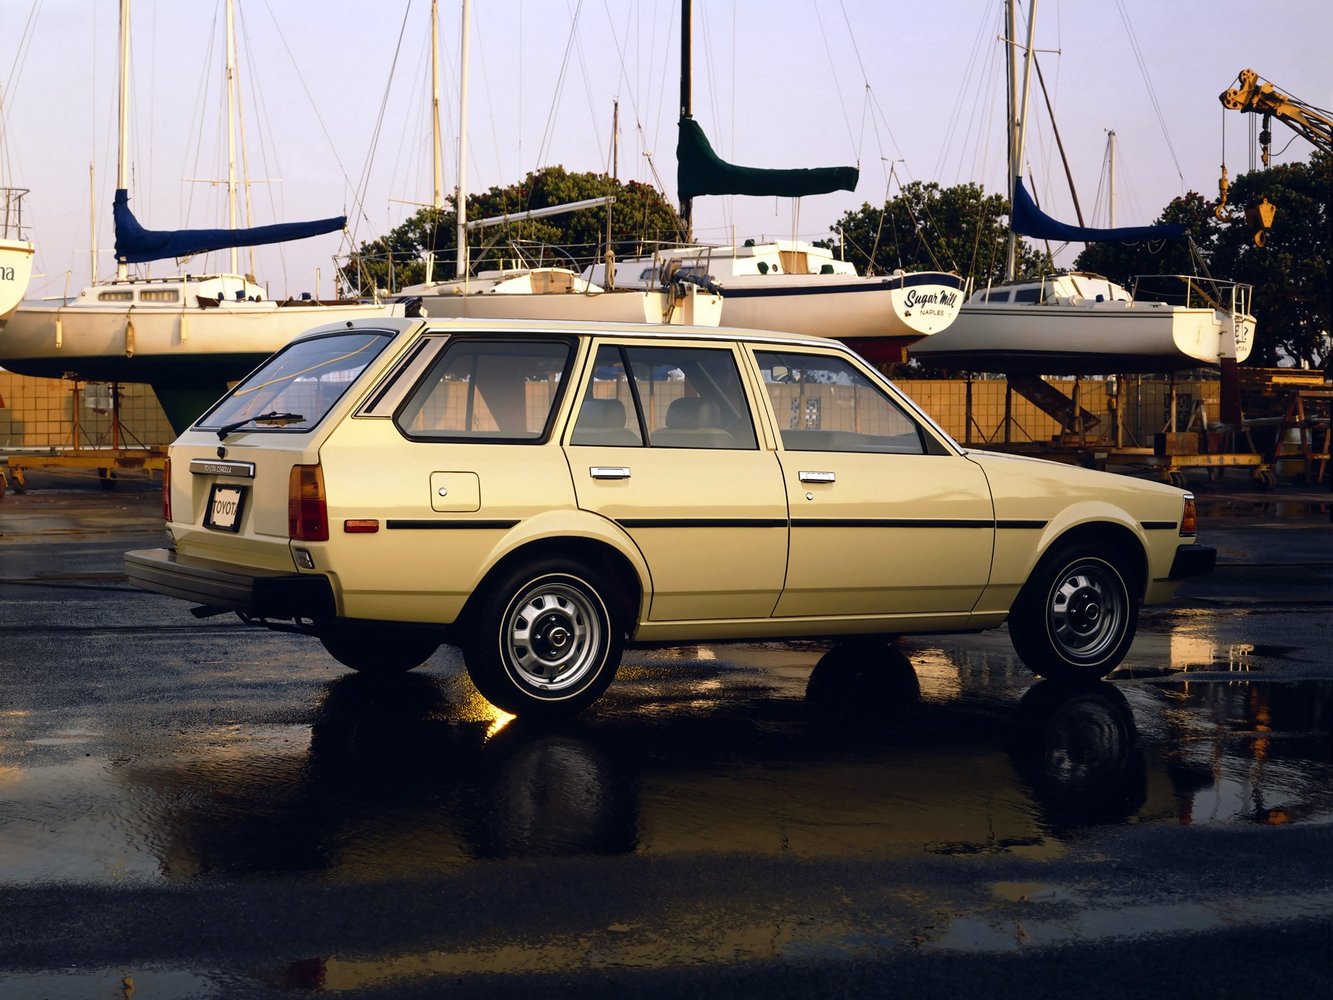 универсал Toyota Corolla 1979 - 1983г выпуска модификация 1.3 MT (60 л.с.)